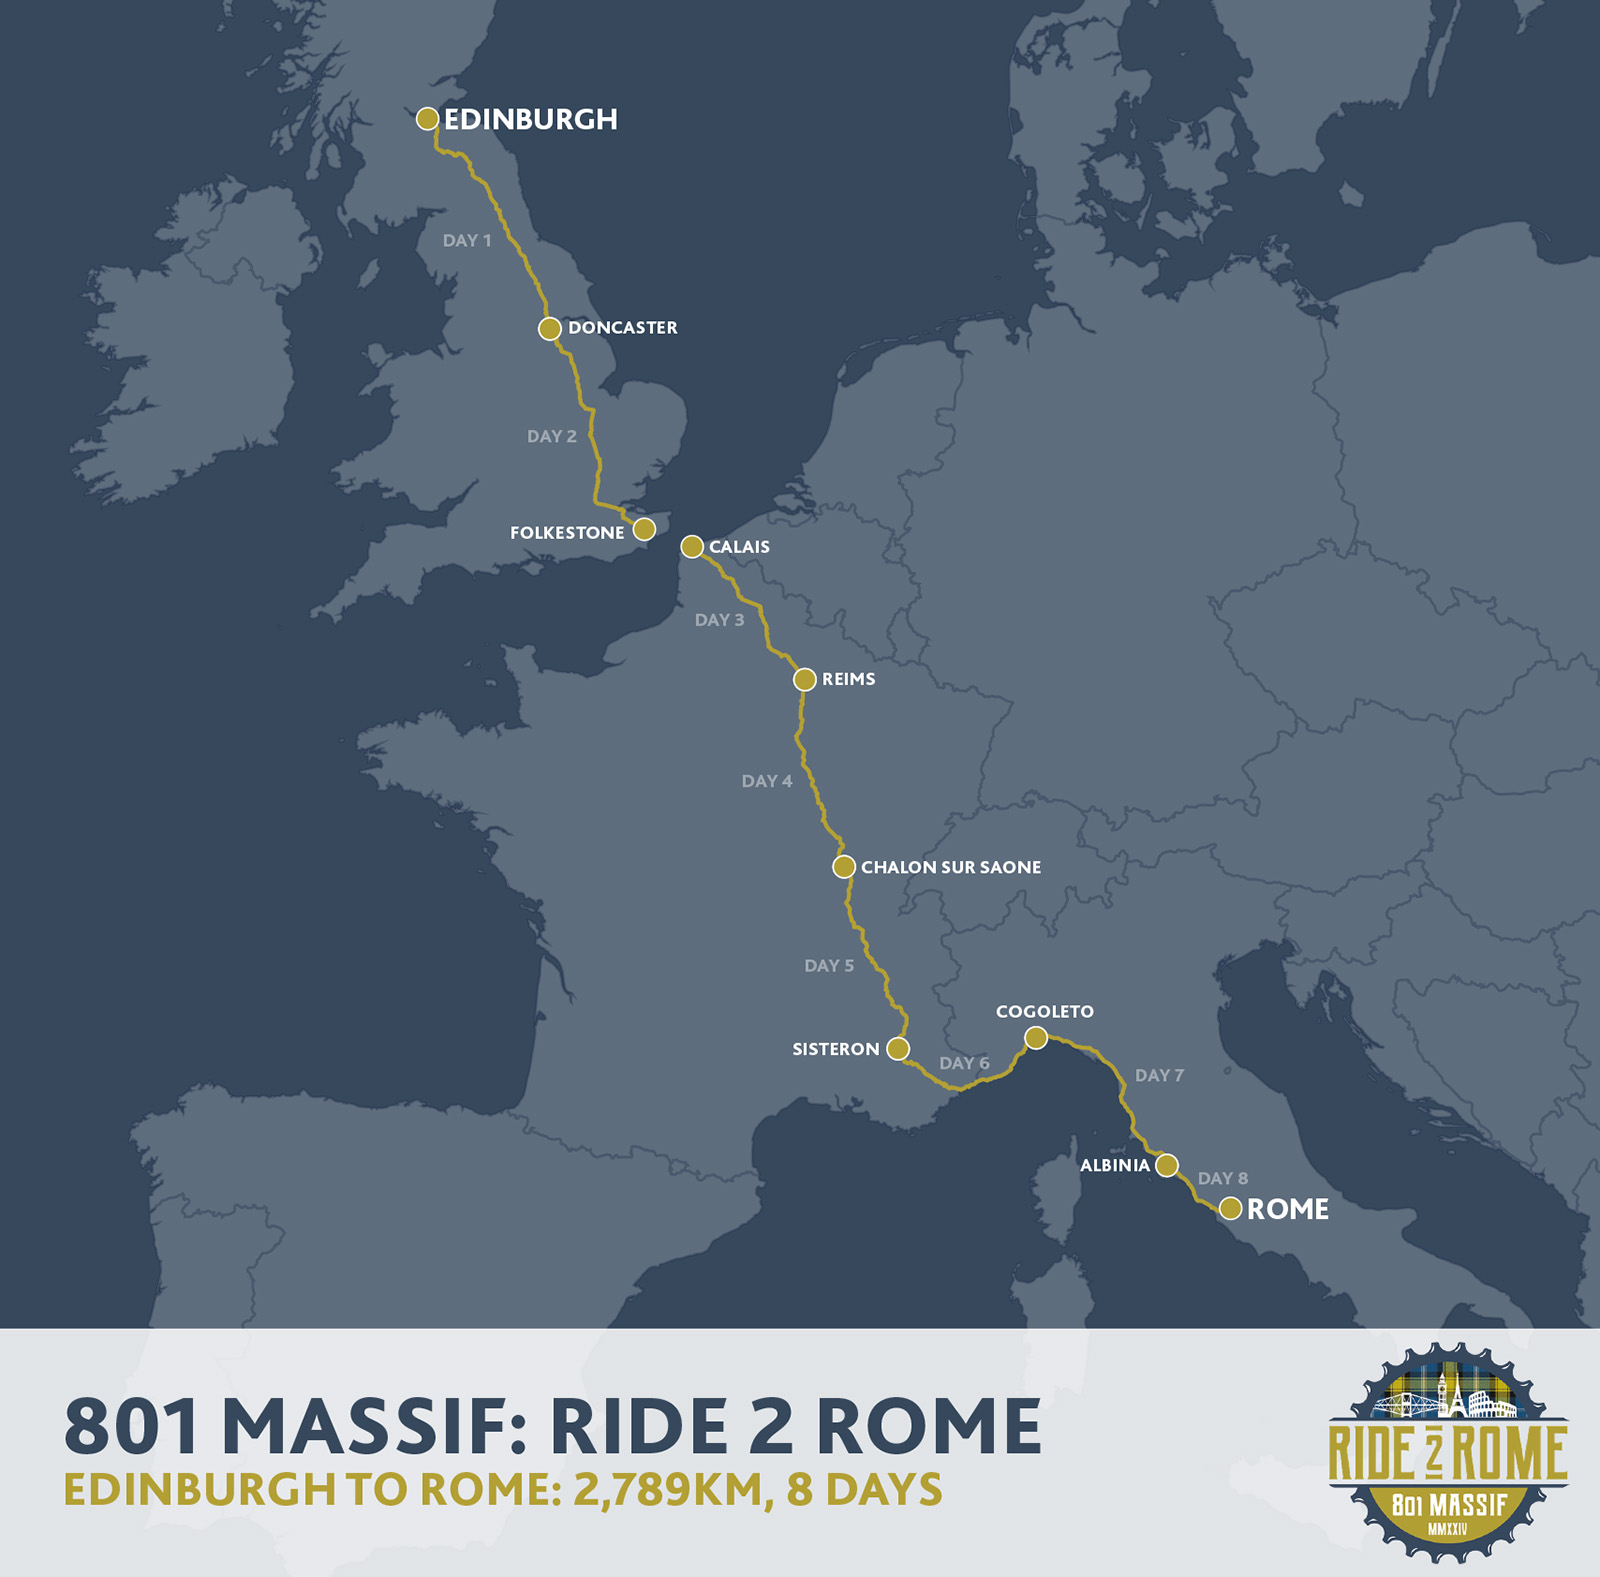 Edinburgh to Rome - The Route